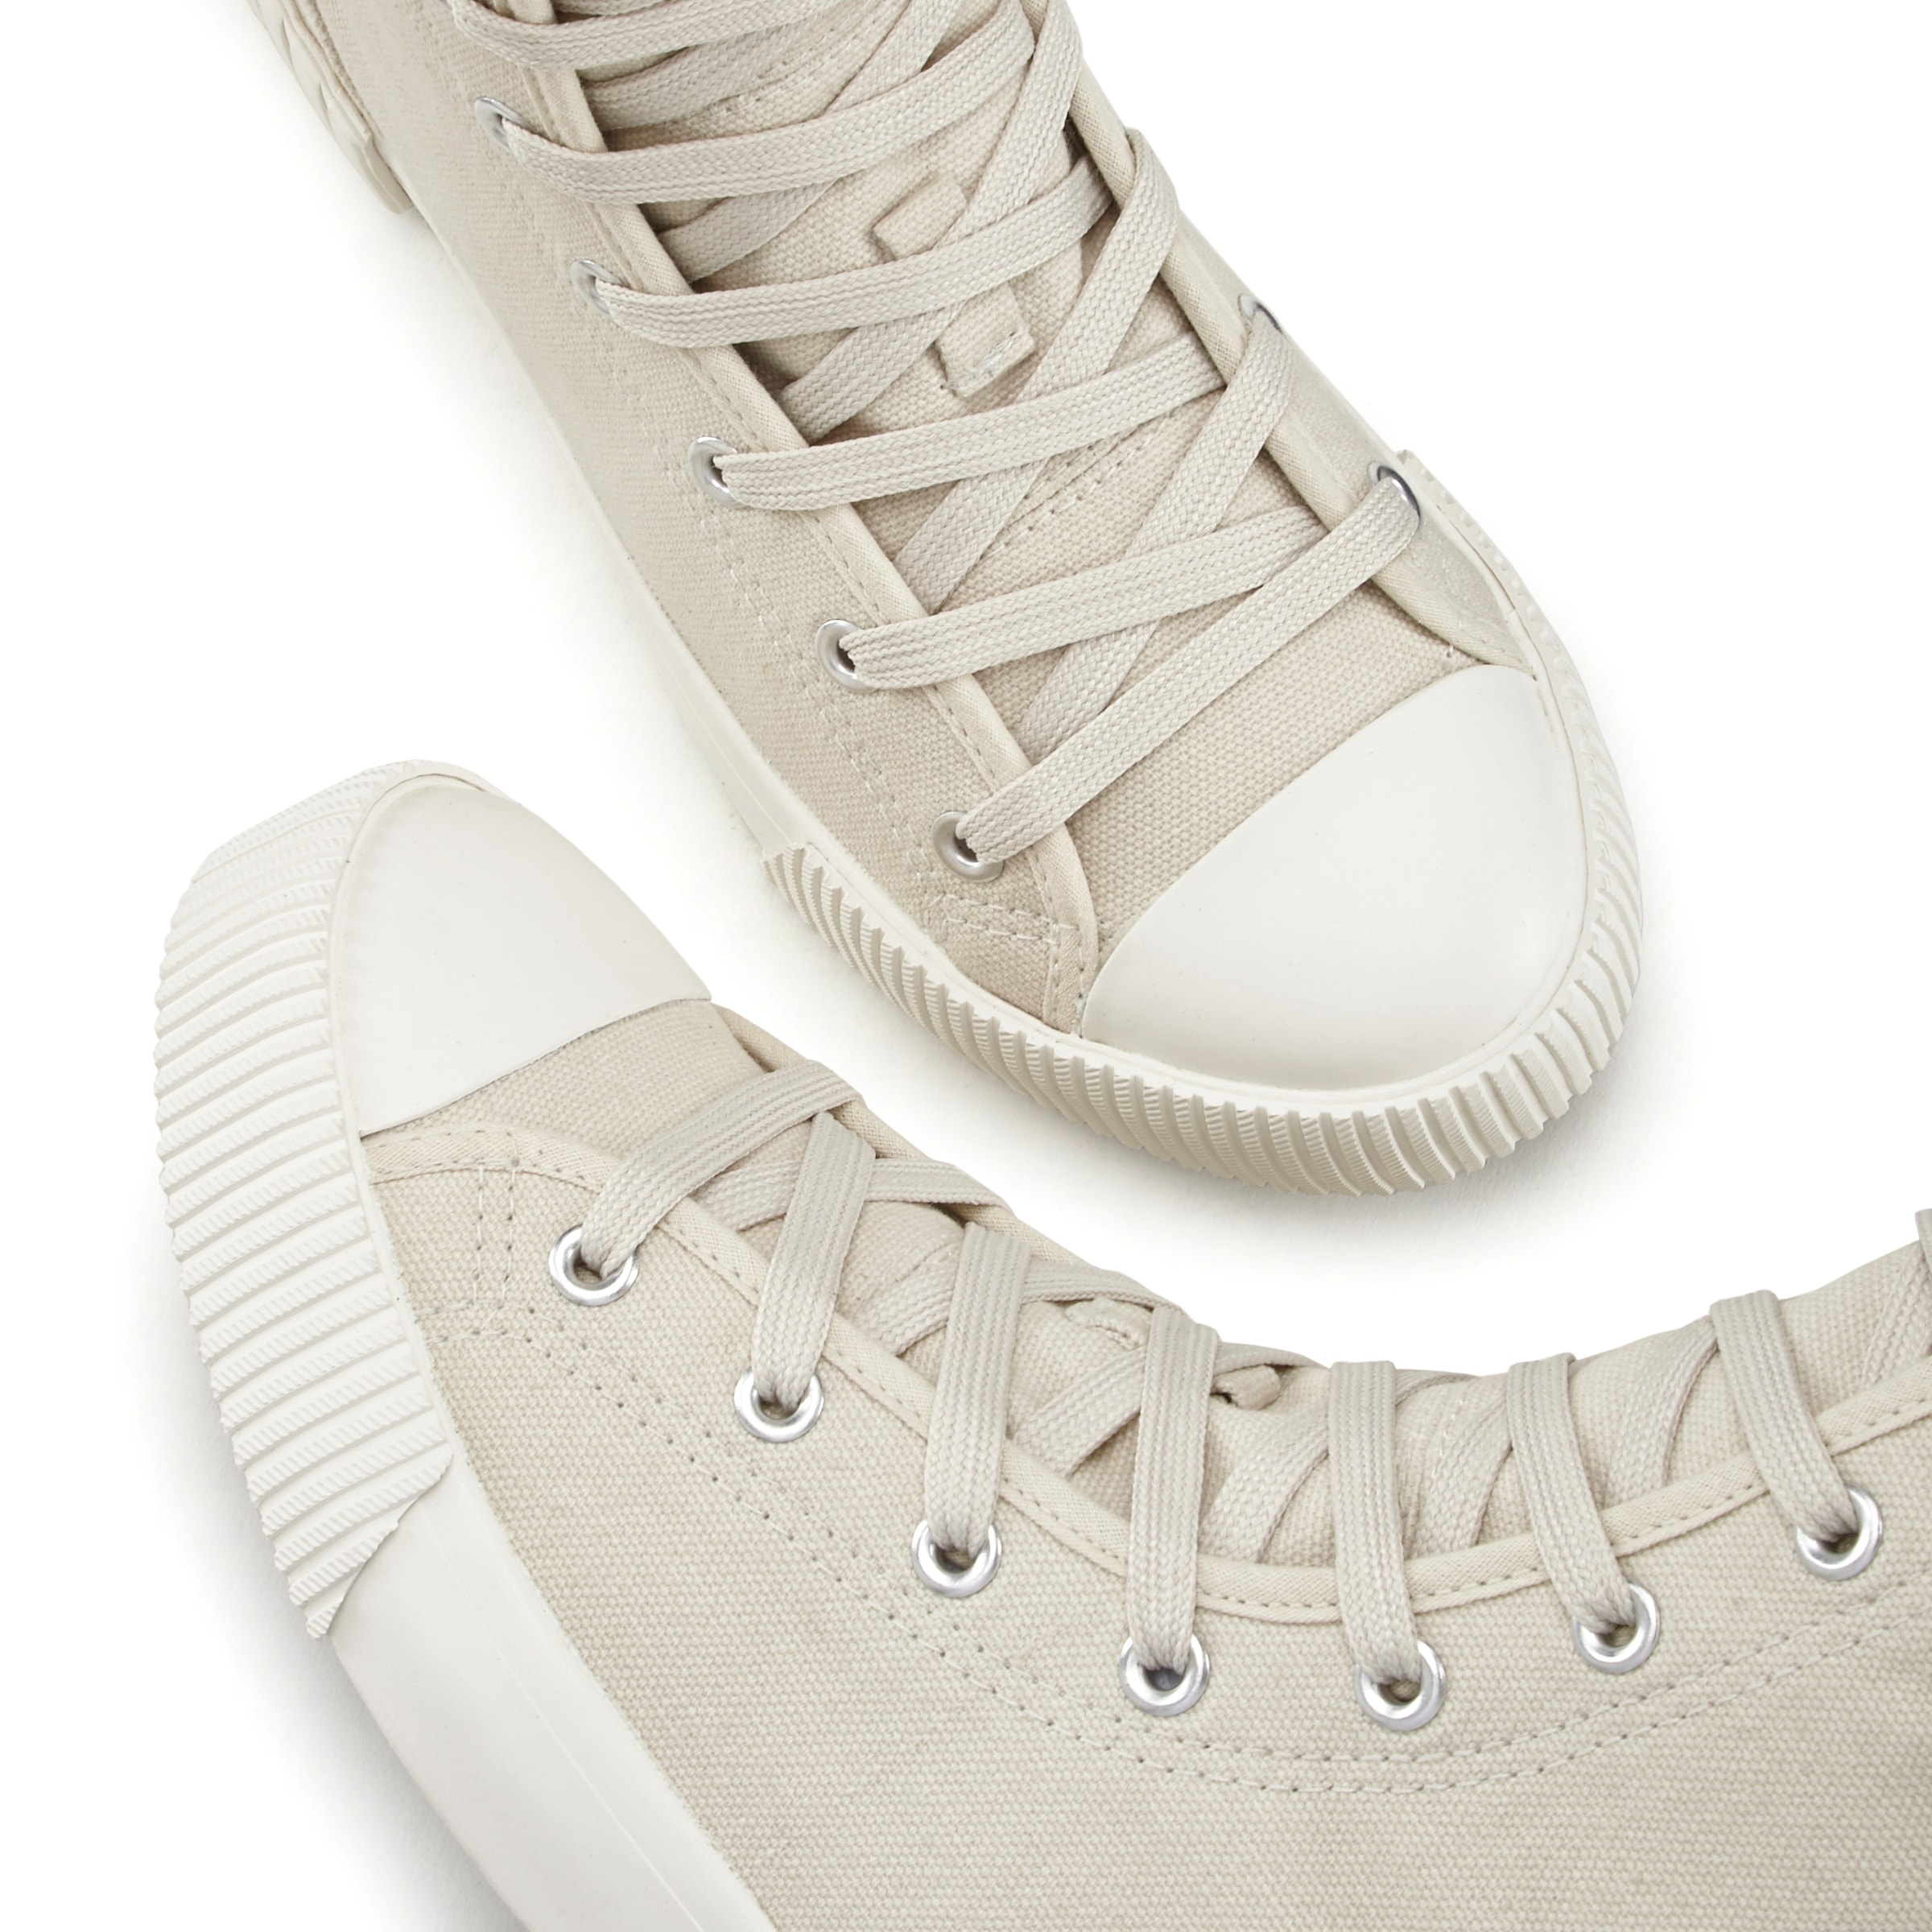 LASCANA Stiefelette, High Shop Online Sneaker, Combat Top bestellen Textil-Boots, OTTO Look trendiger Schnürschuh, im